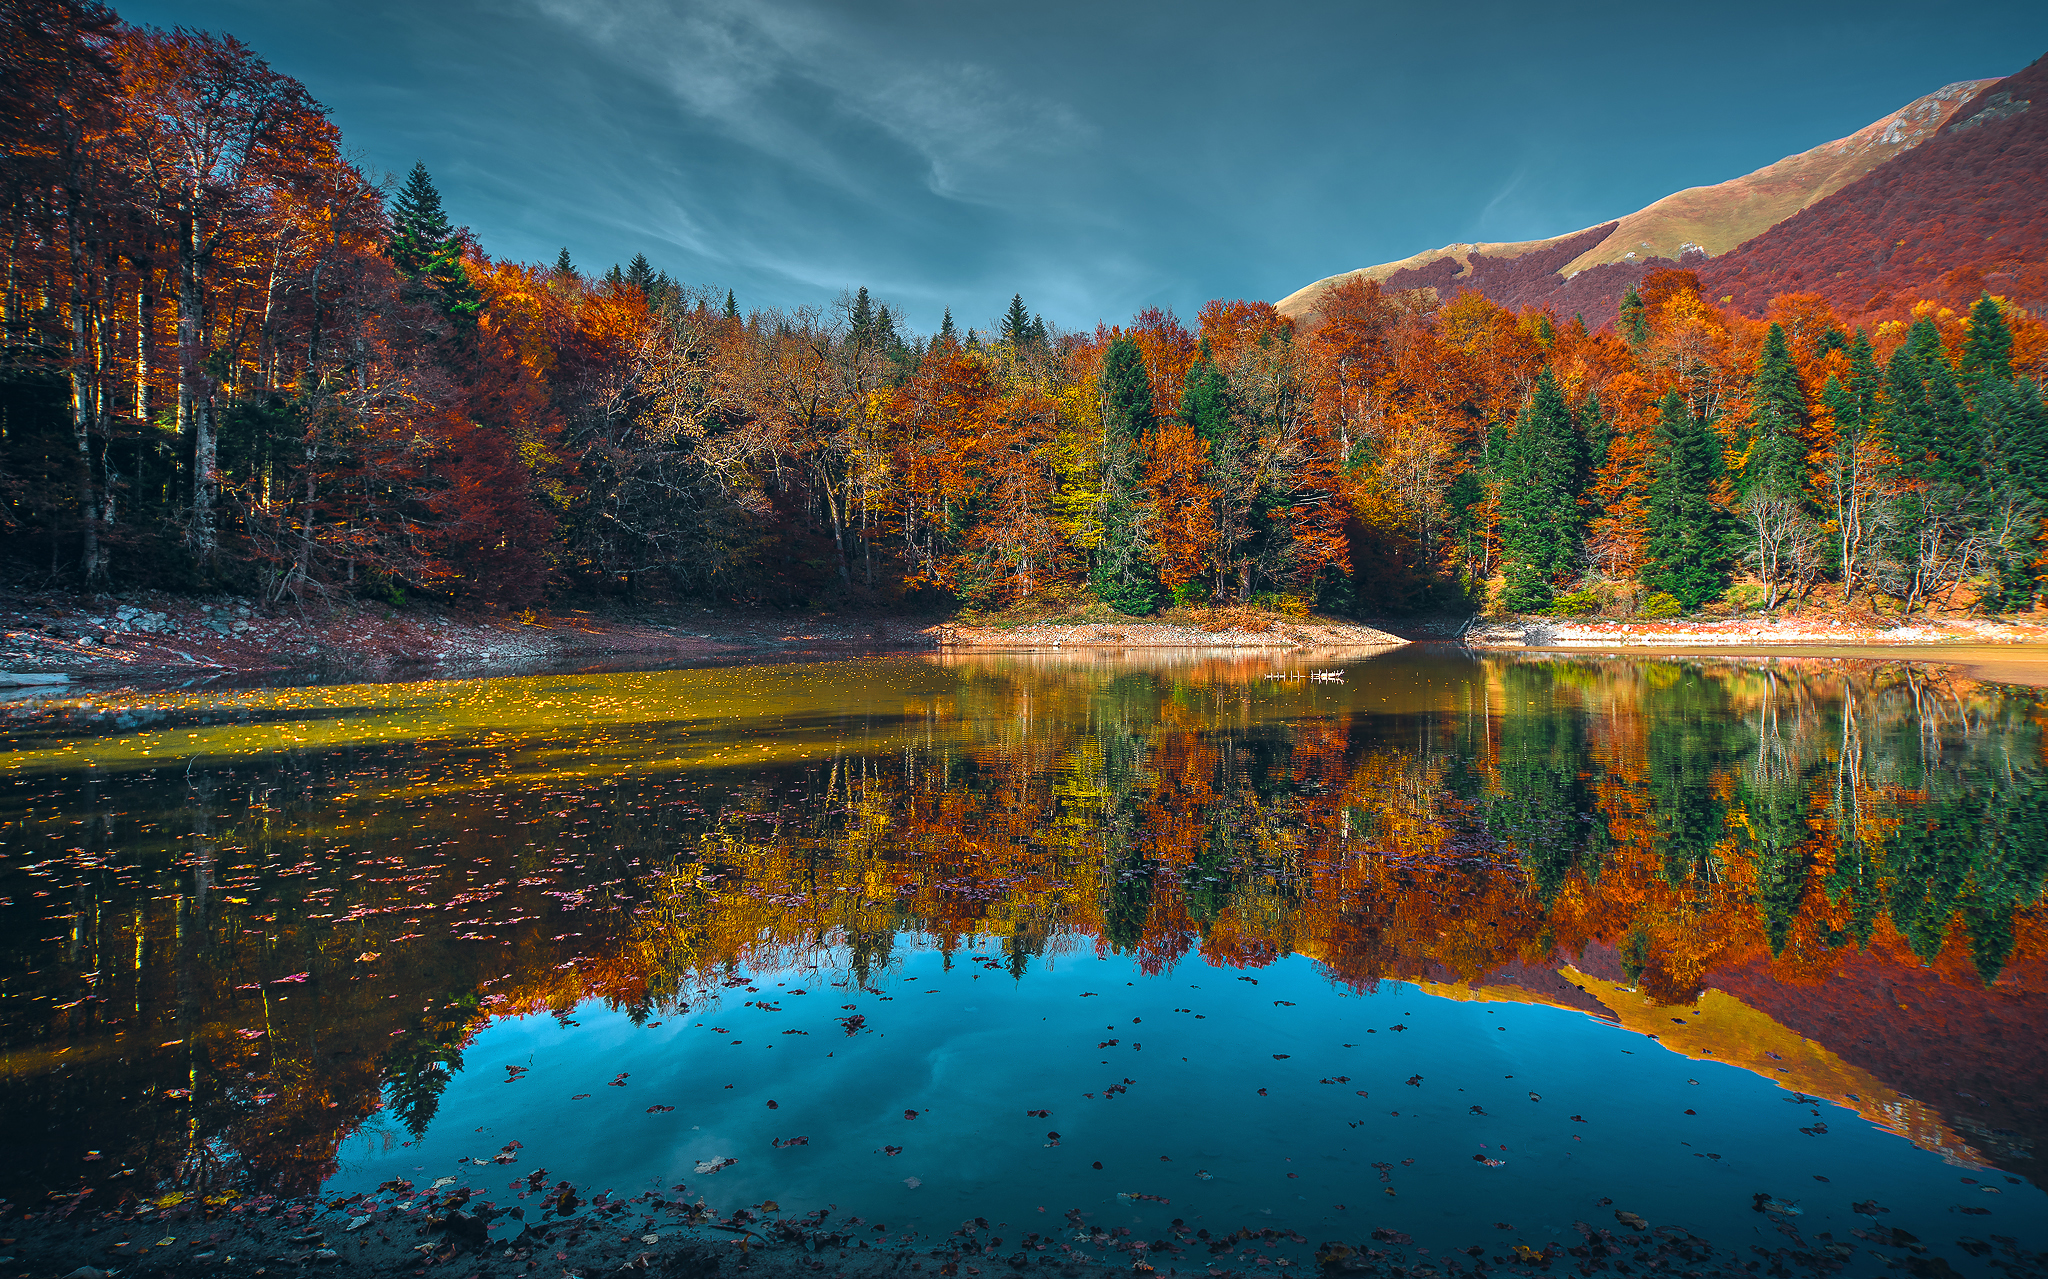 871198 descargar imagen tierra/naturaleza, reflejo, otoño, bosque, lago, montenegro, naturaleza: fondos de pantalla y protectores de pantalla gratis